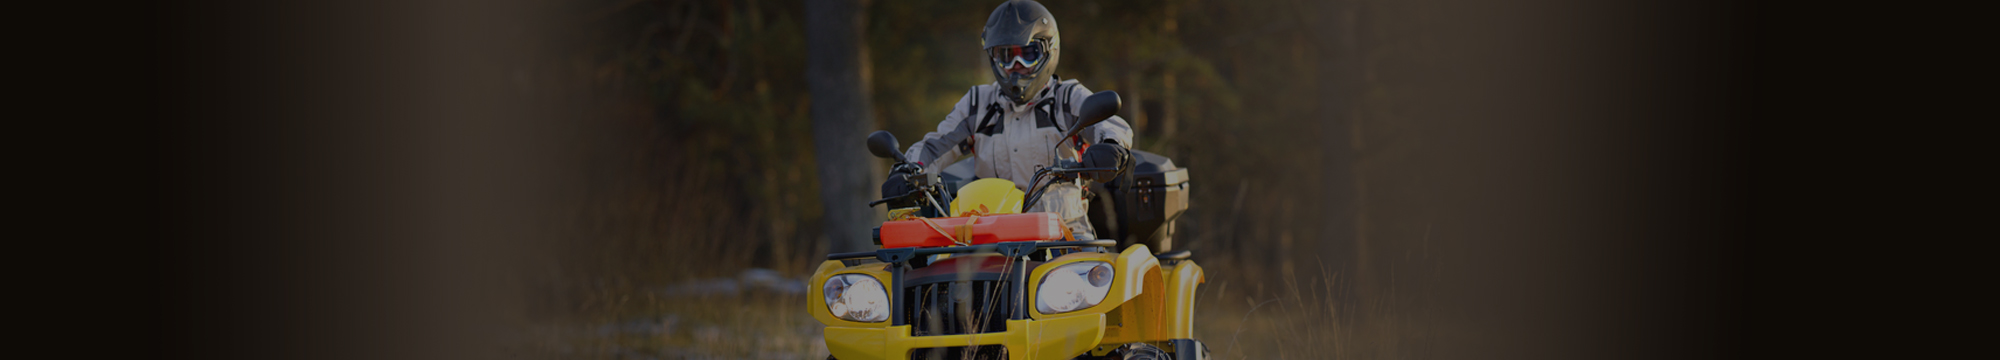 Weego ATV rider - powersports